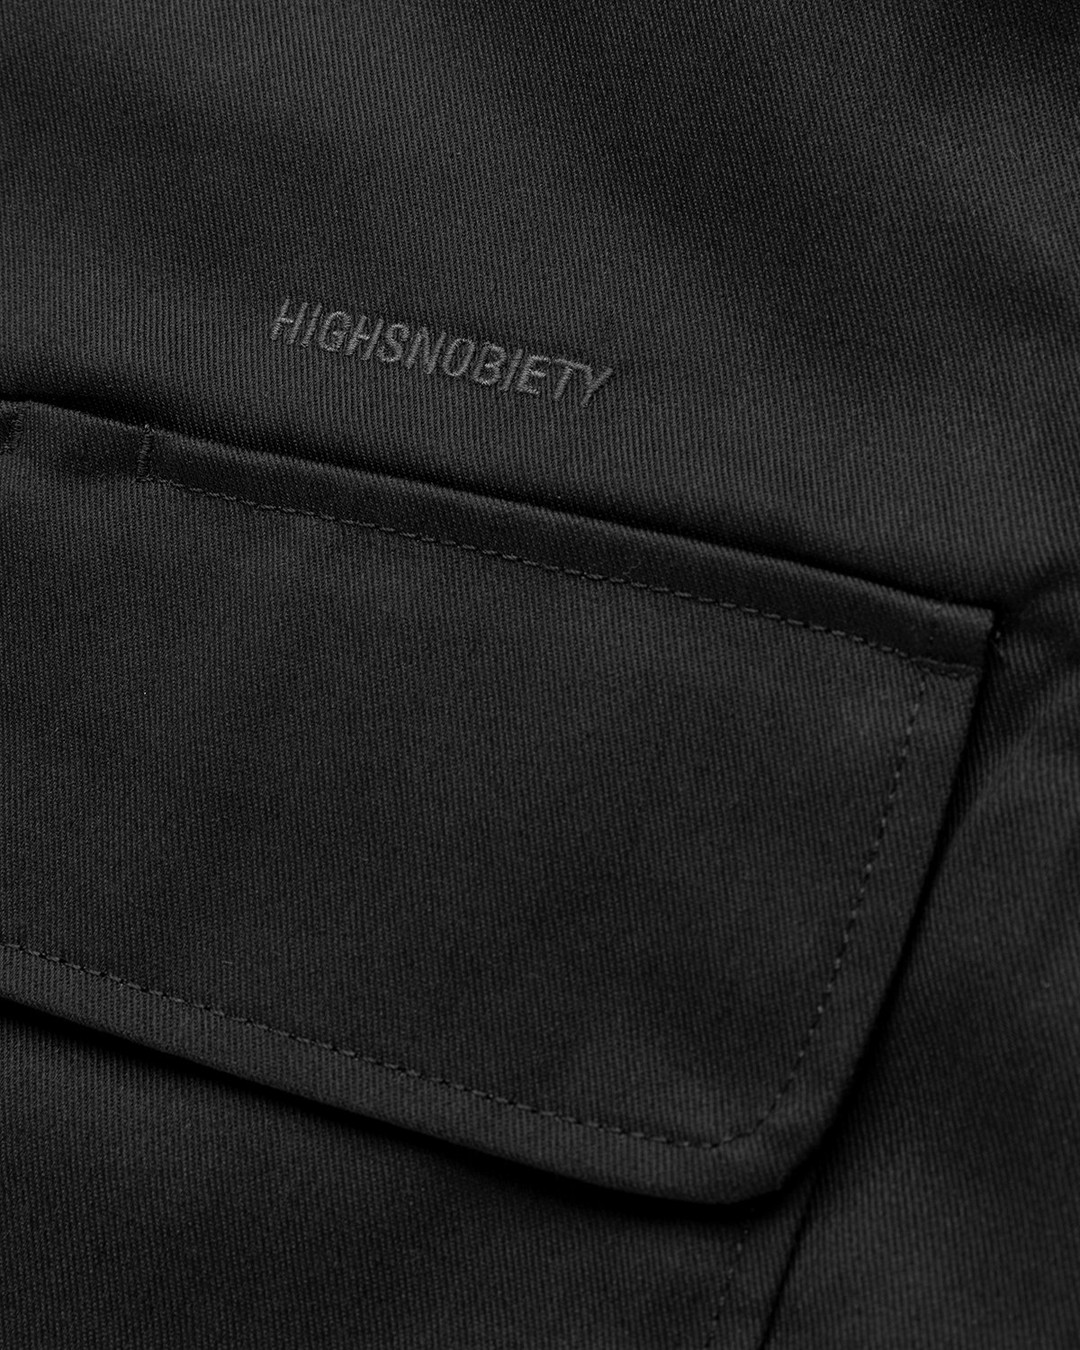 Highsnobiety x Dickies – Service Shirt Black - Longsleeve Shirts - Black - Image 5